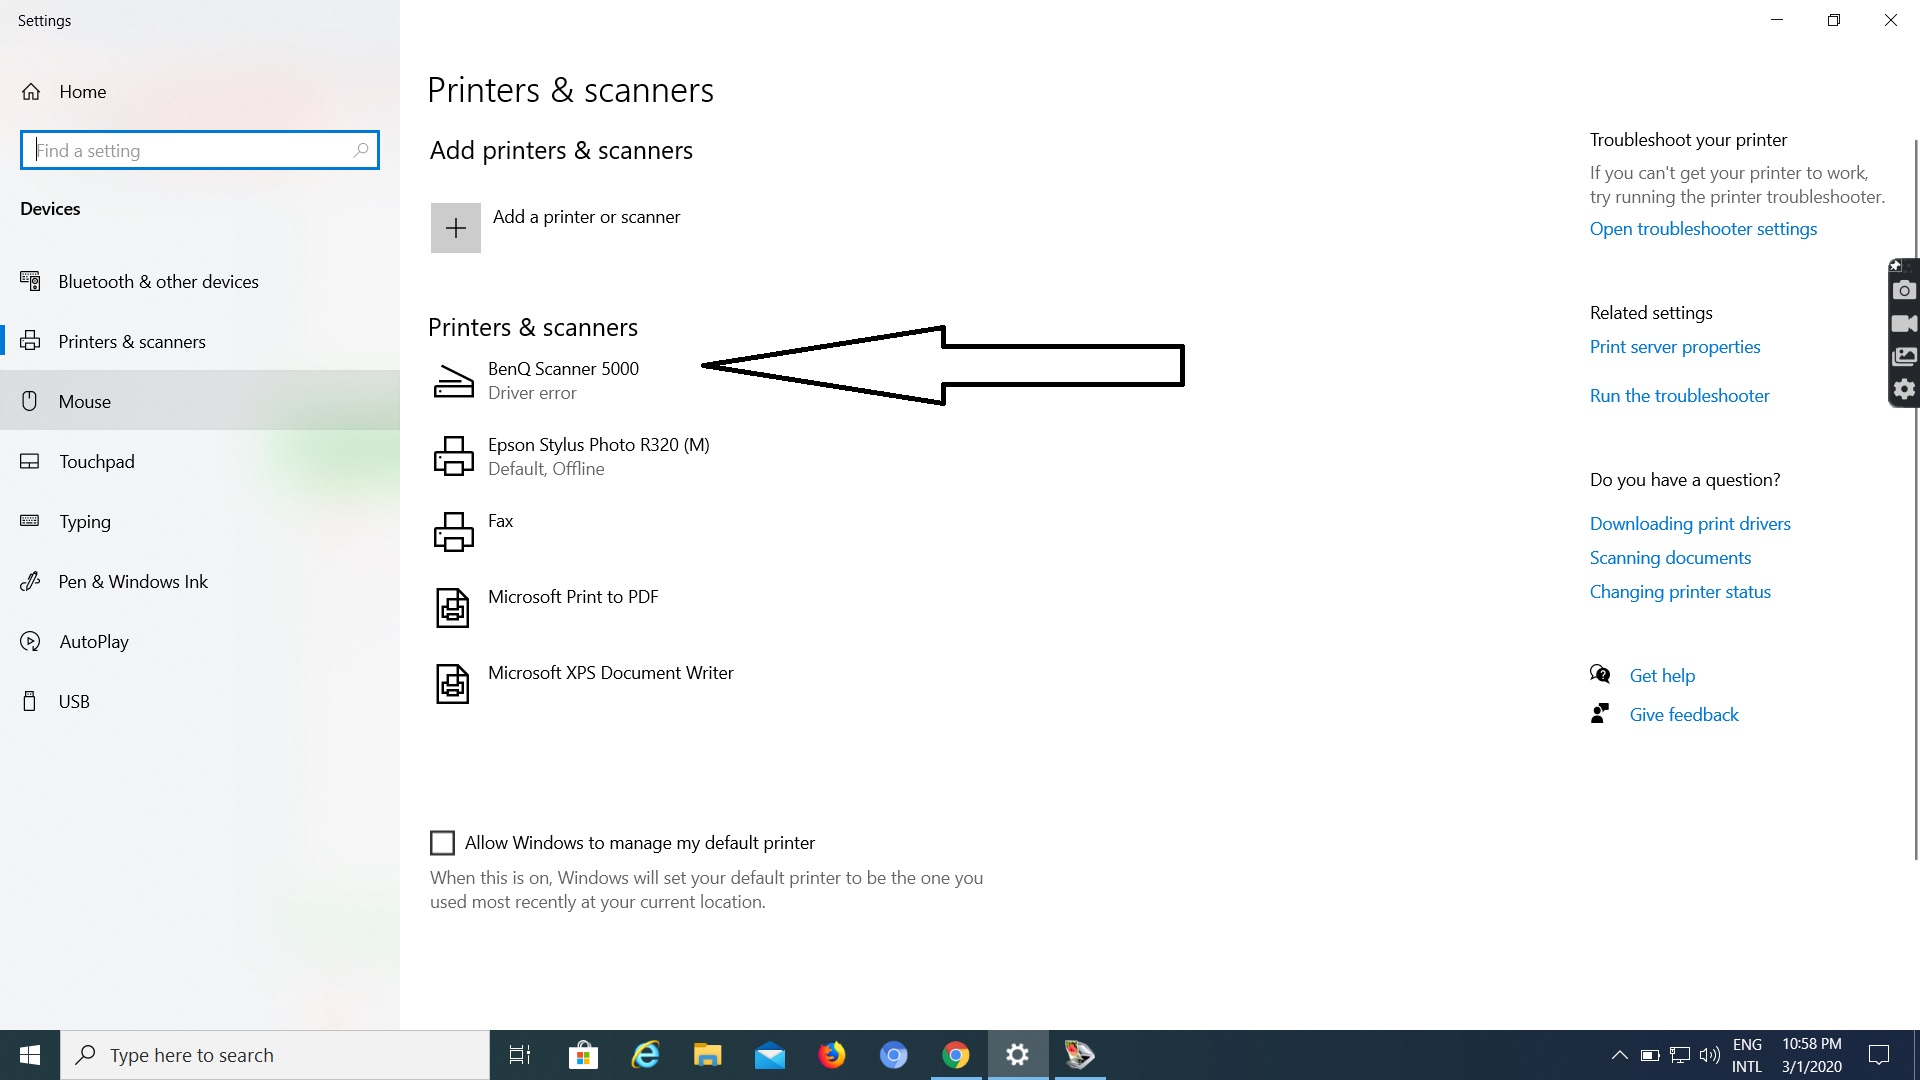 Benq Scanner 5000 is not working in Windows 10